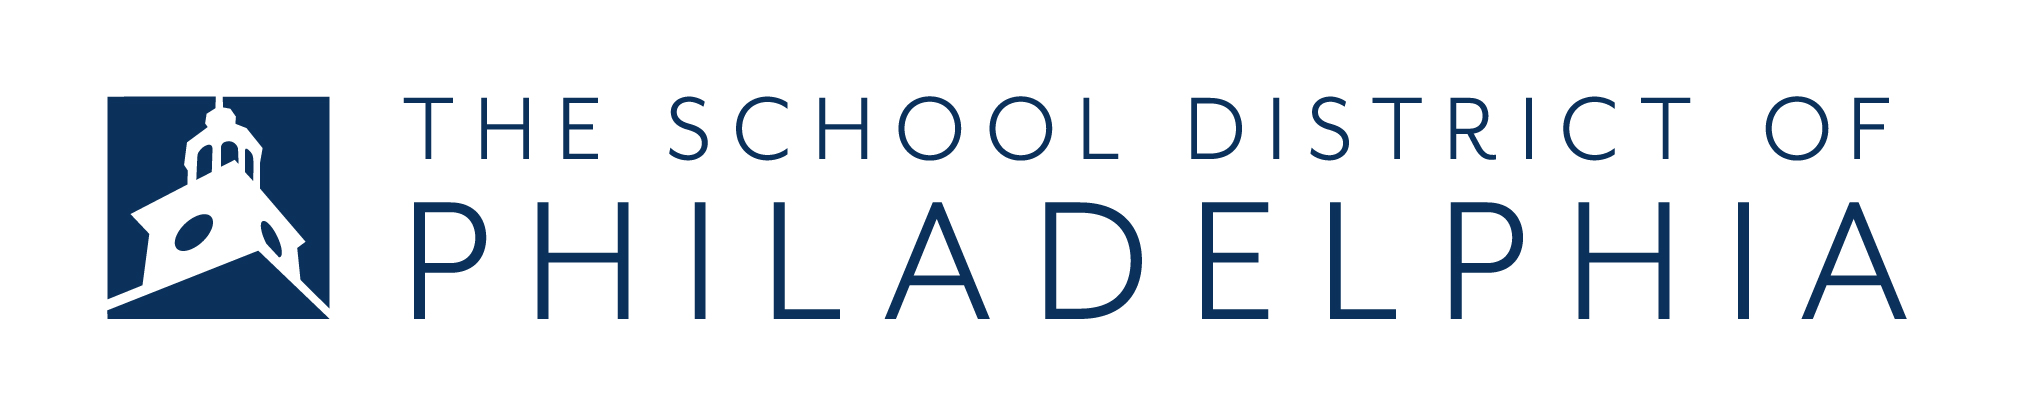 School District of Philadelphia - School District of Philadelphia VOD Player - organization logo